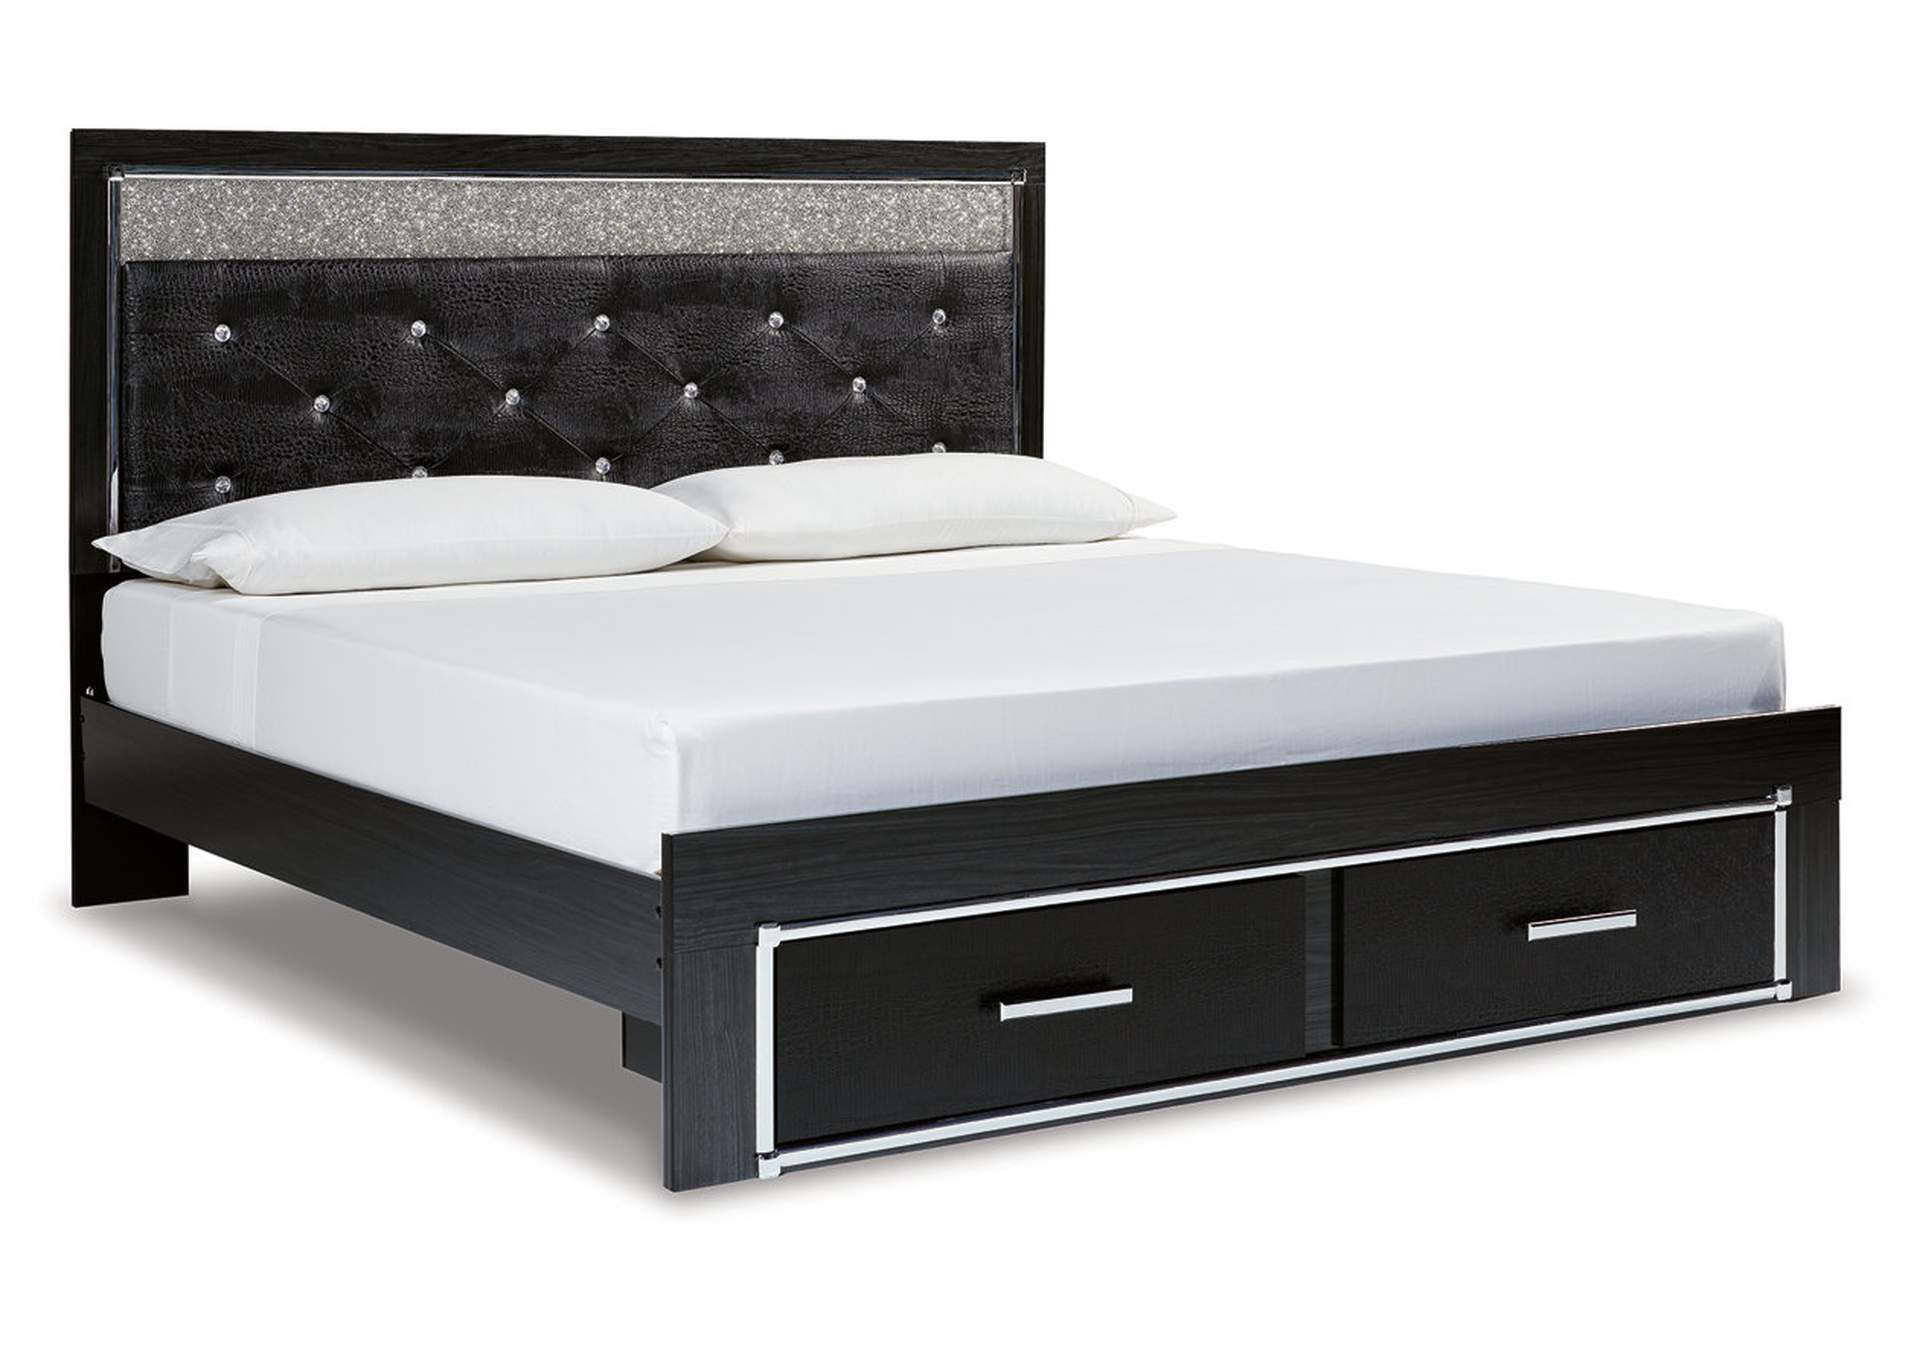 Kaydell King Upholstered Panel Storage Platform Bed, Dresser and Mirror,Signature Design By Ashley